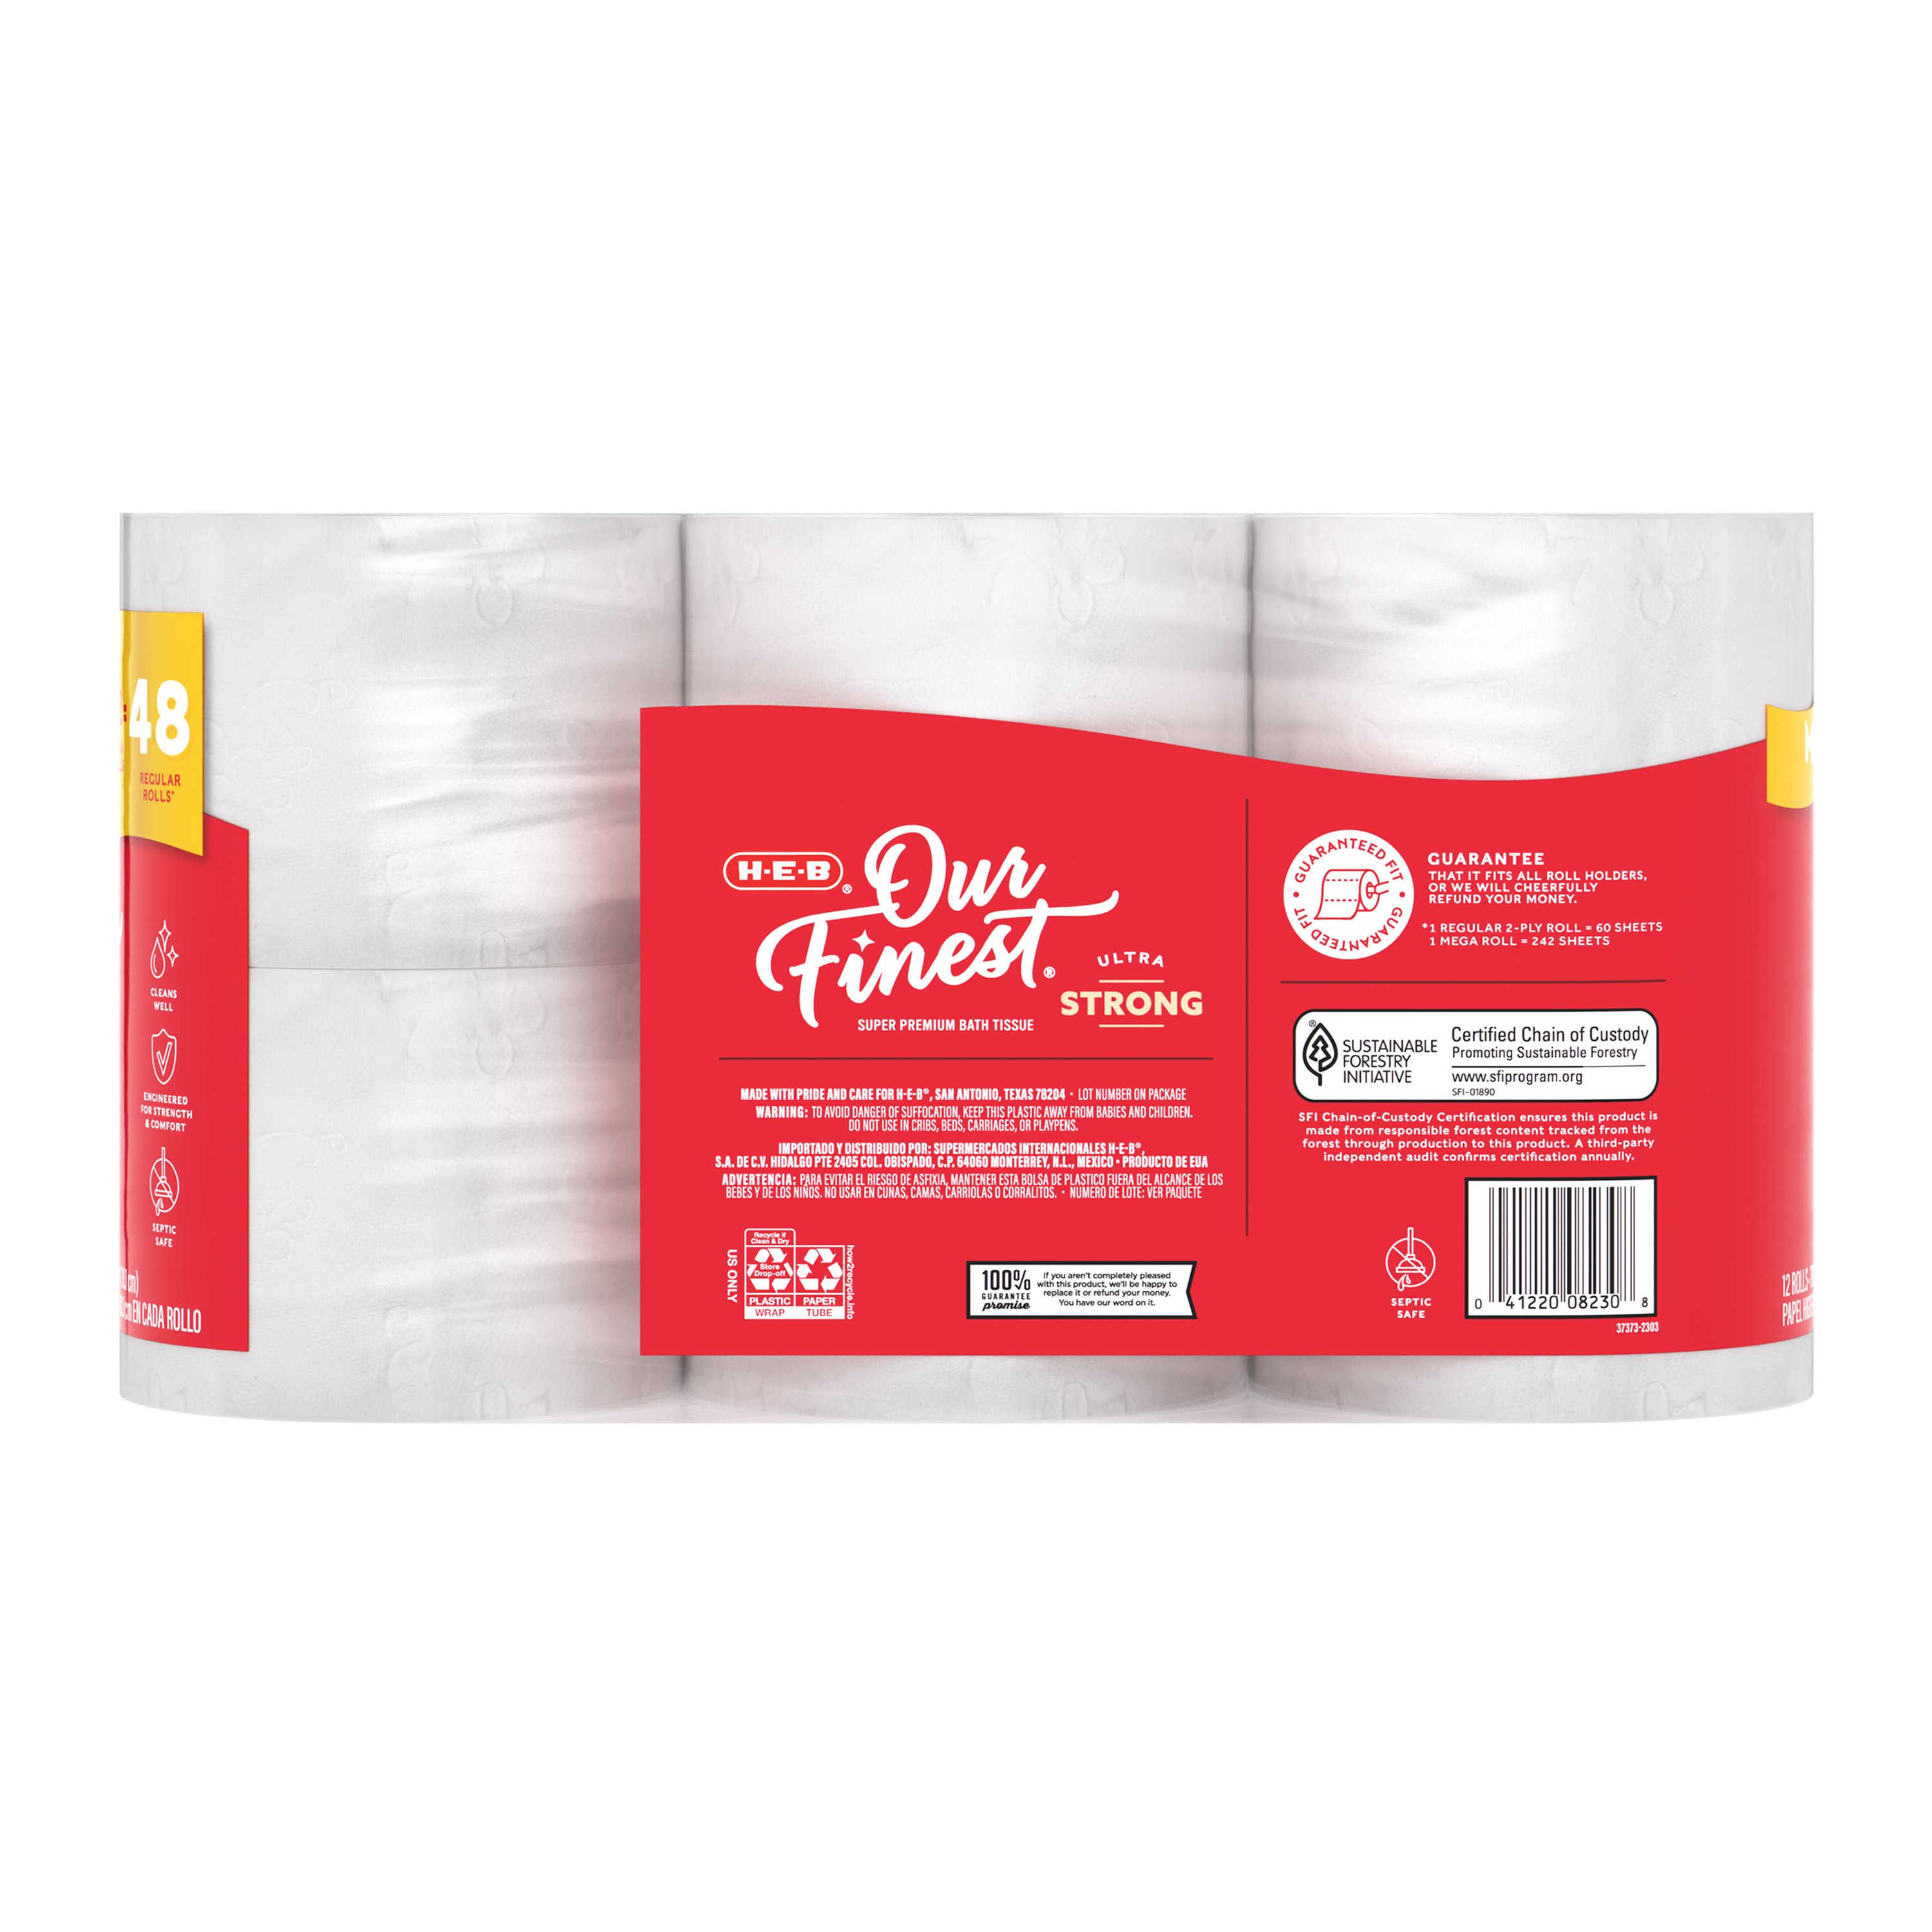 Scott 1000 Sheets Toilet Paper - Shop Toilet Paper at H-E-B